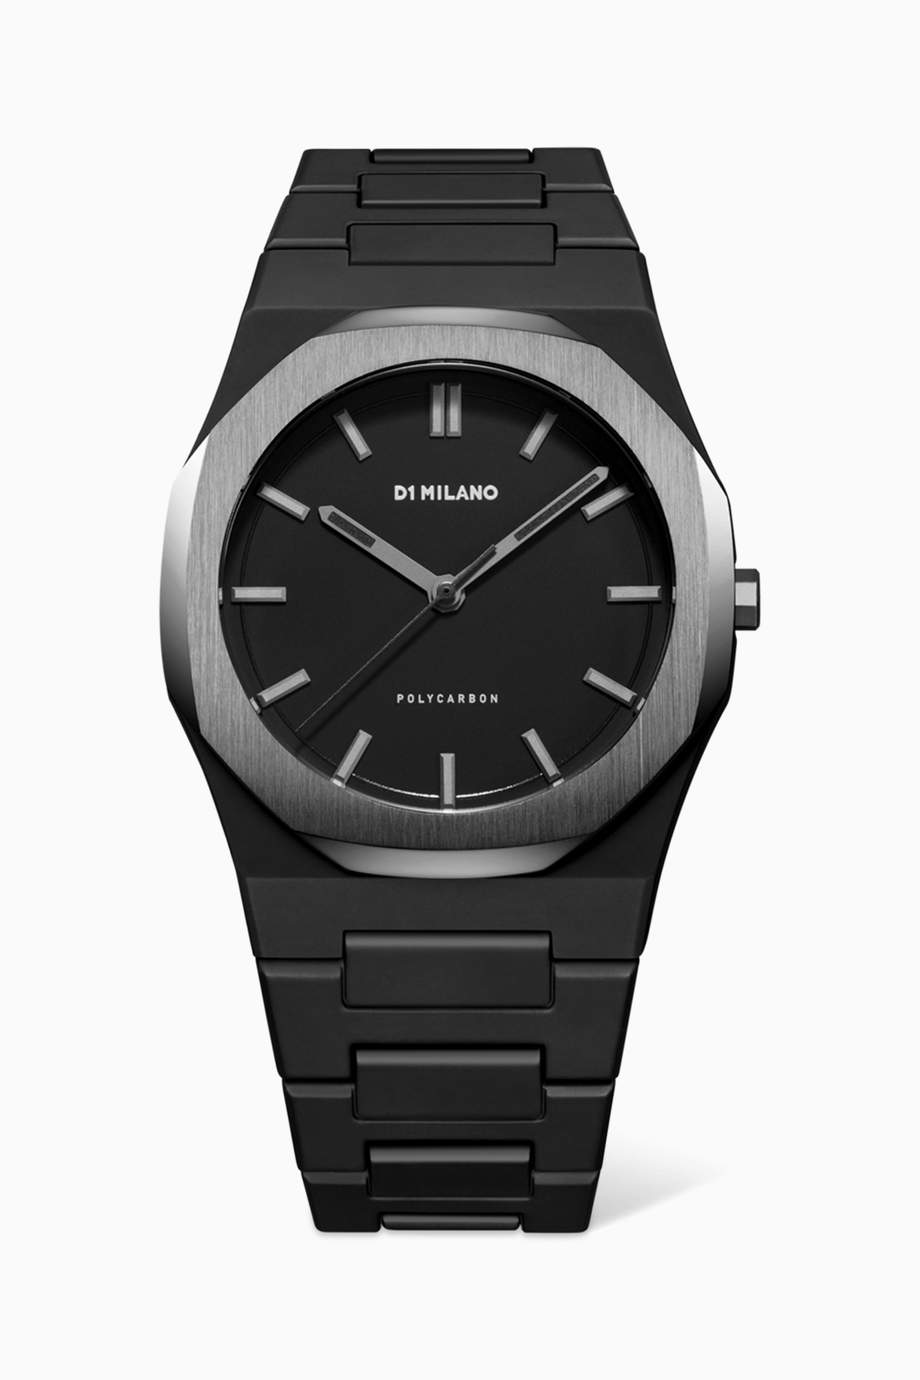 Shop D1 Milano Black Polycarbon 40mm Space Grey Watch for Men | Ounass UAE